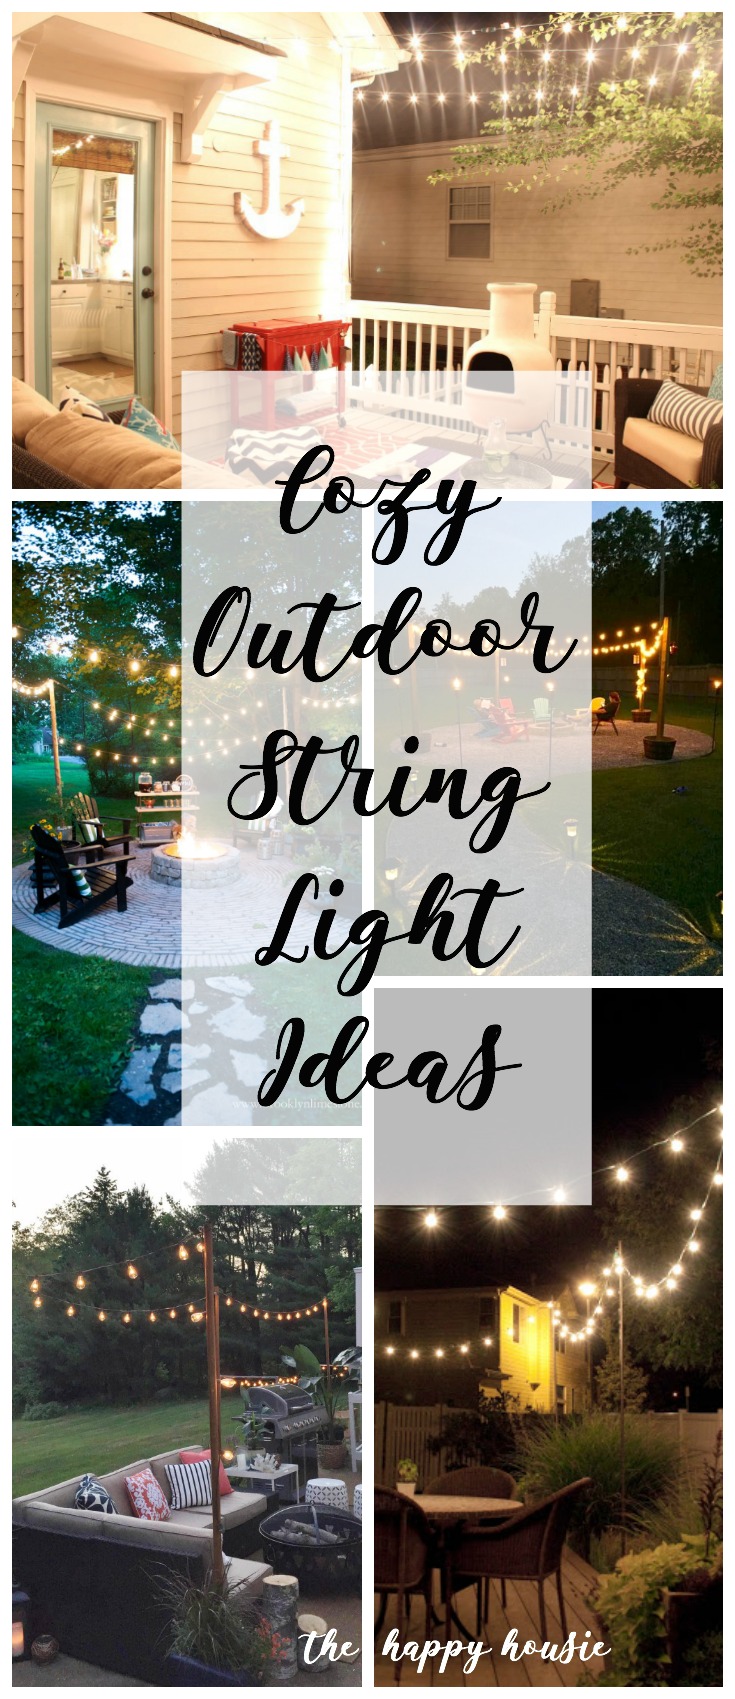 Cozy outdoor string light ideas poster.